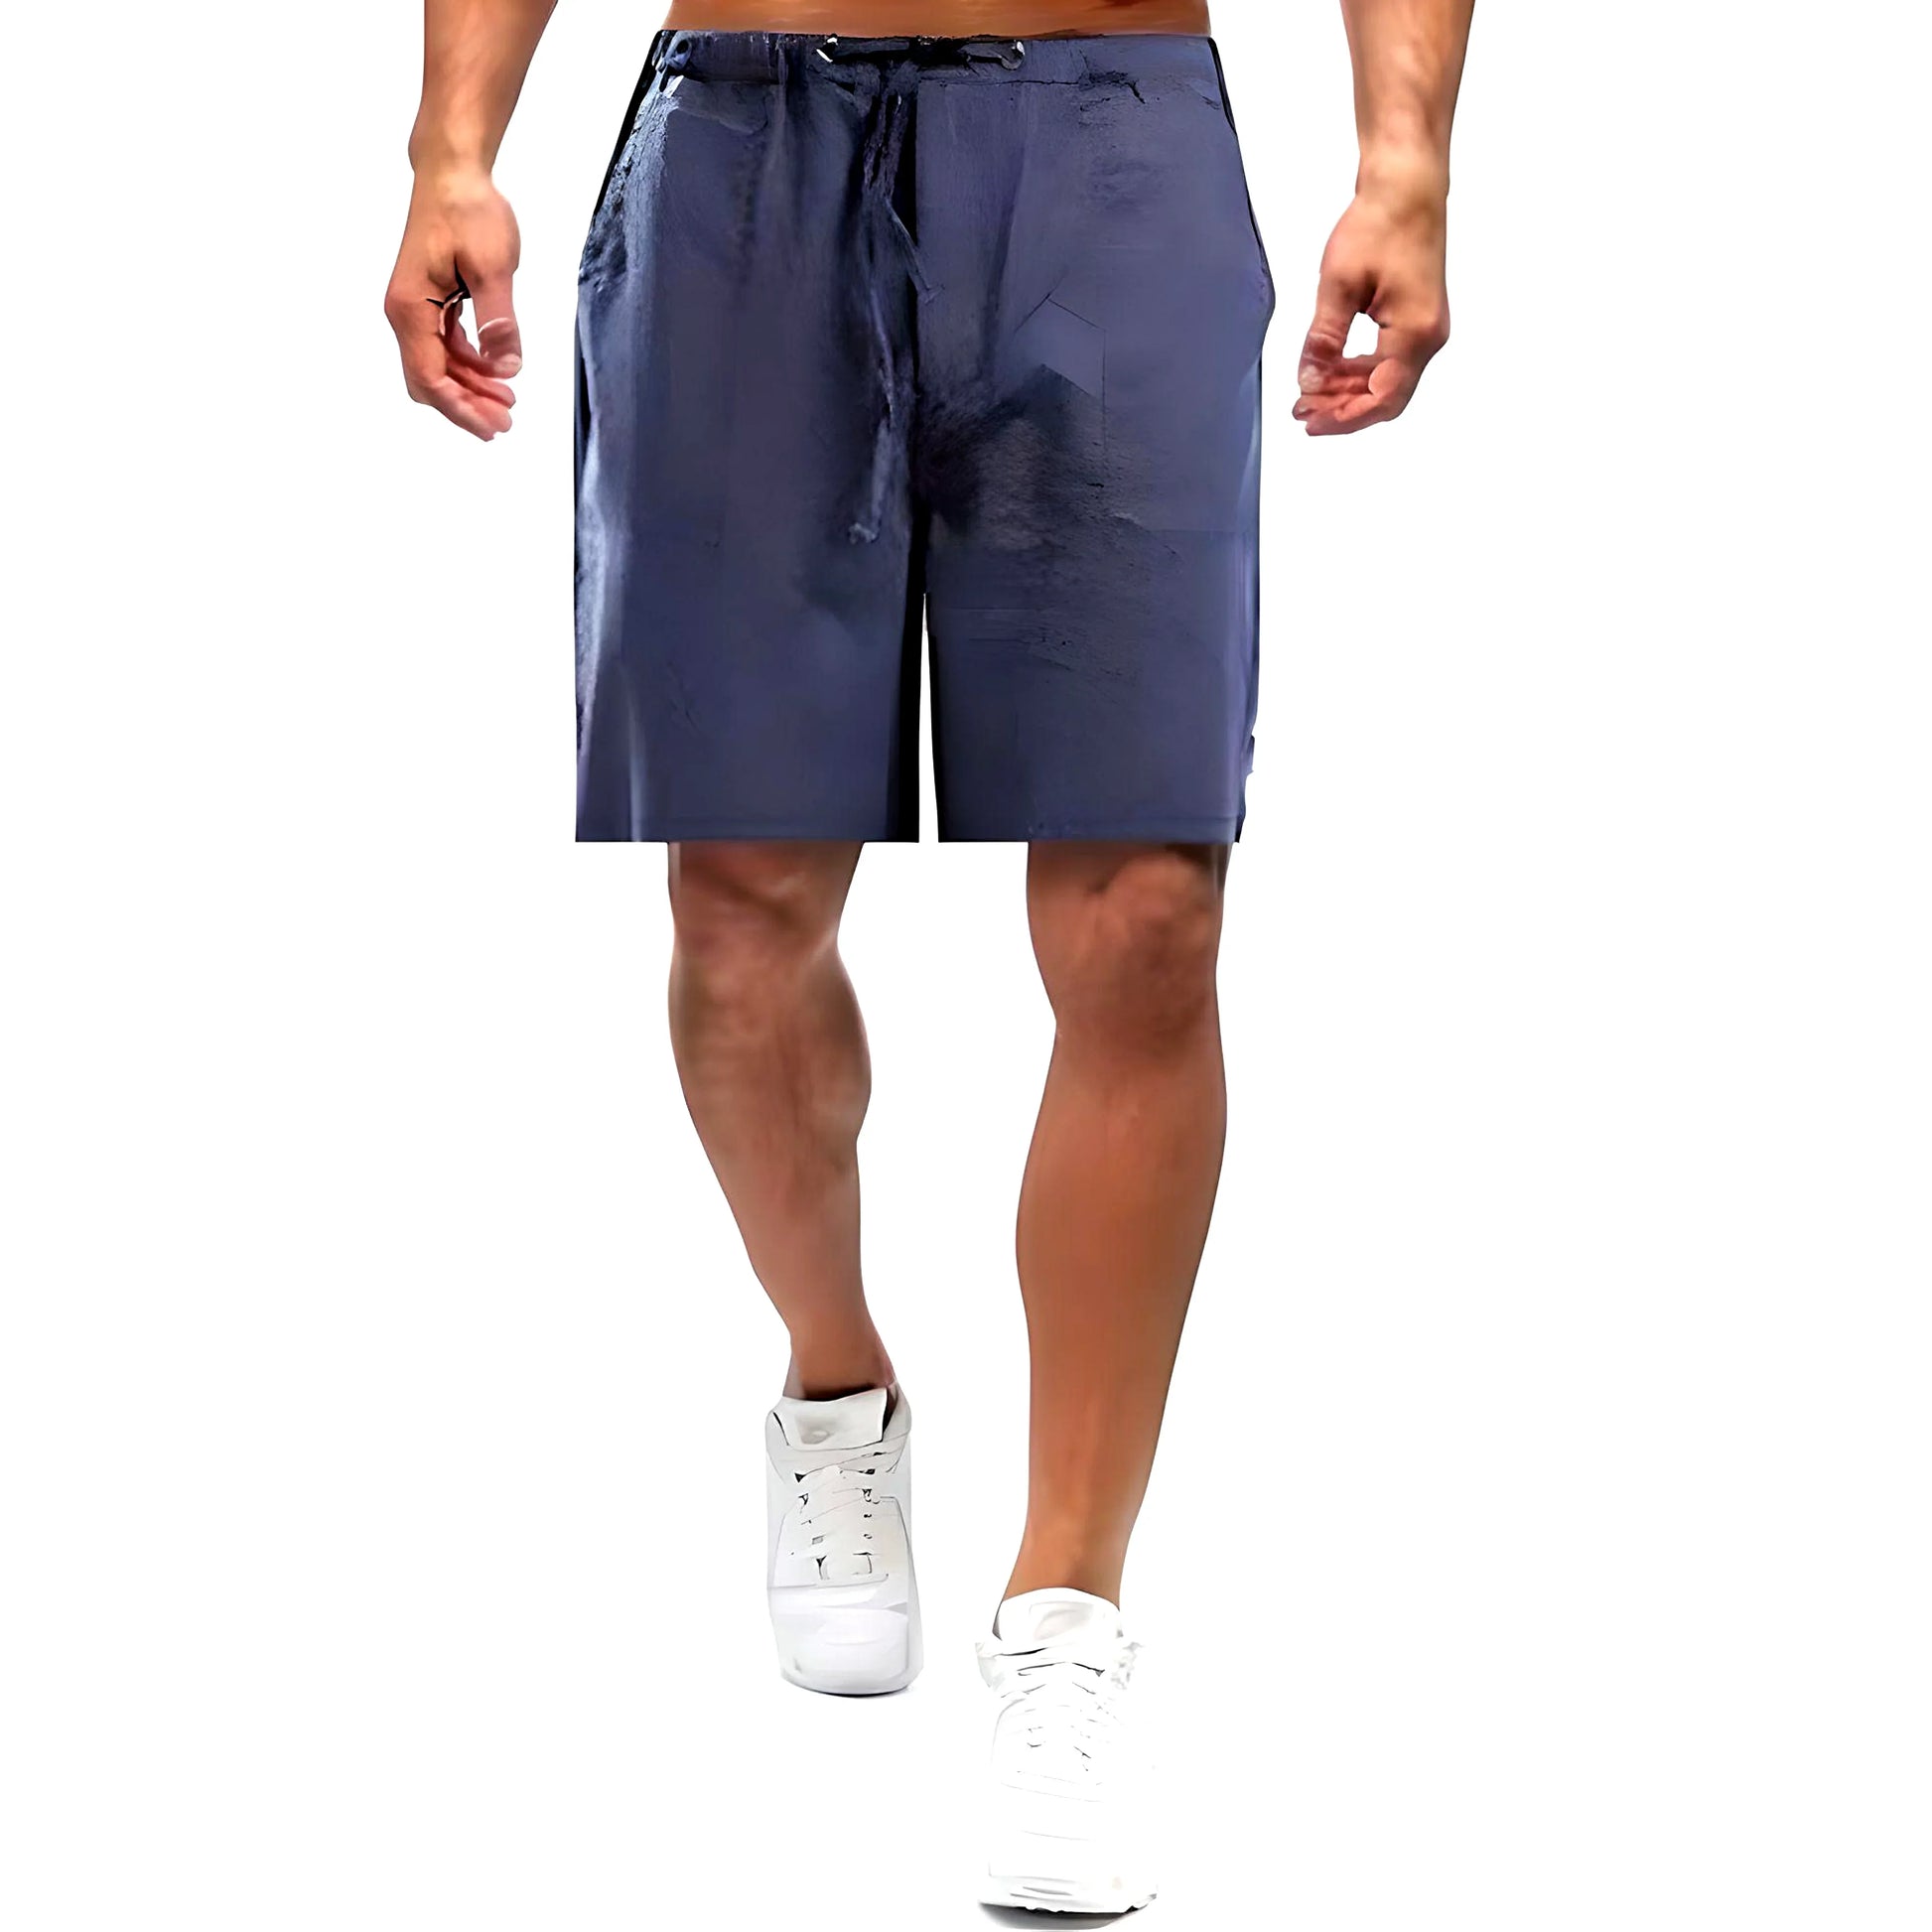 Charles | Casual Linen Shorts - Blue / M - AMVIM